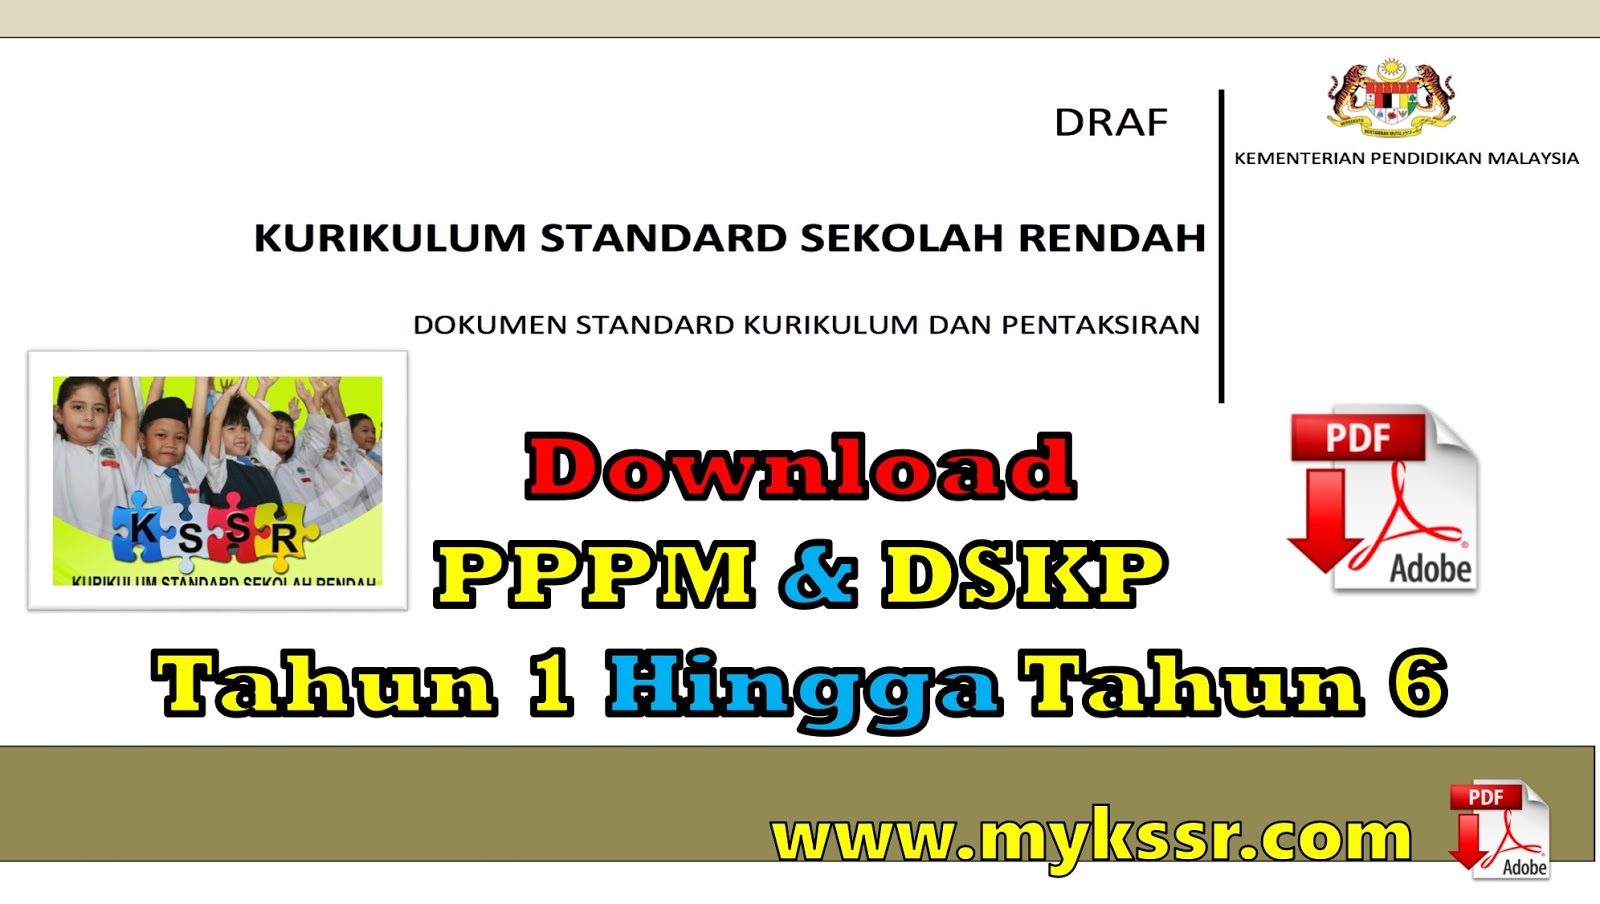 Download PPPM & DSKP Tahun 1 Hingga Tahun 6  Mykssr.com